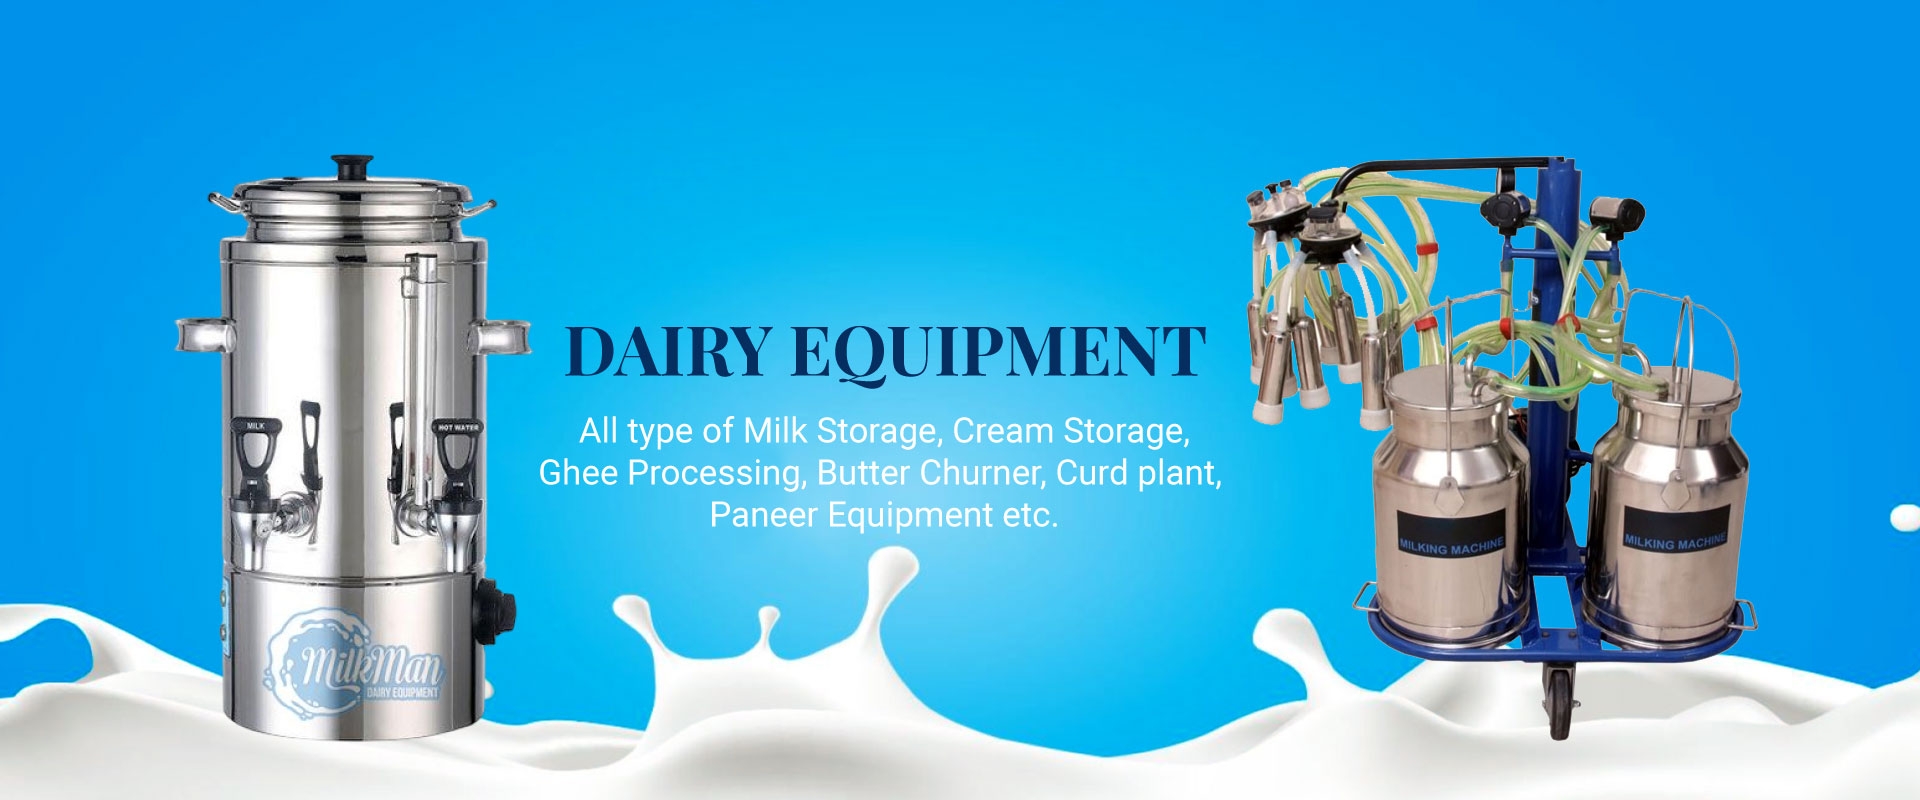 Dairy Equipment in Sri Lanka